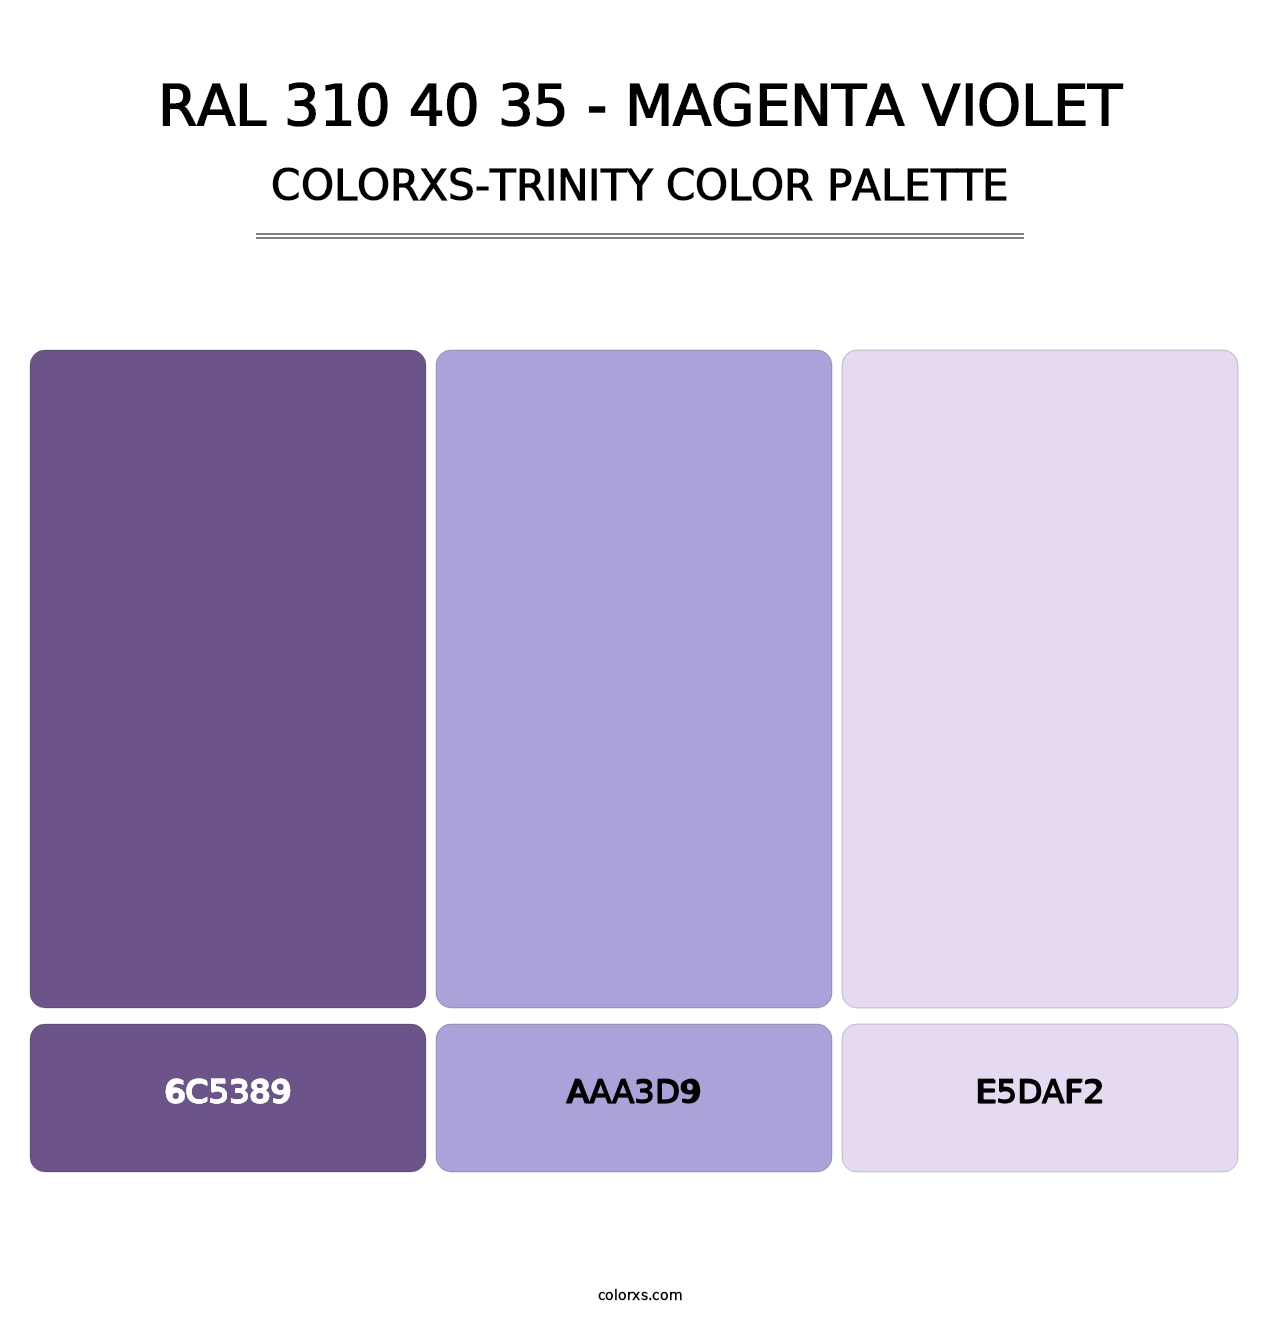 RAL 310 40 35 - Magenta Violet - Colorxs Trinity Palette